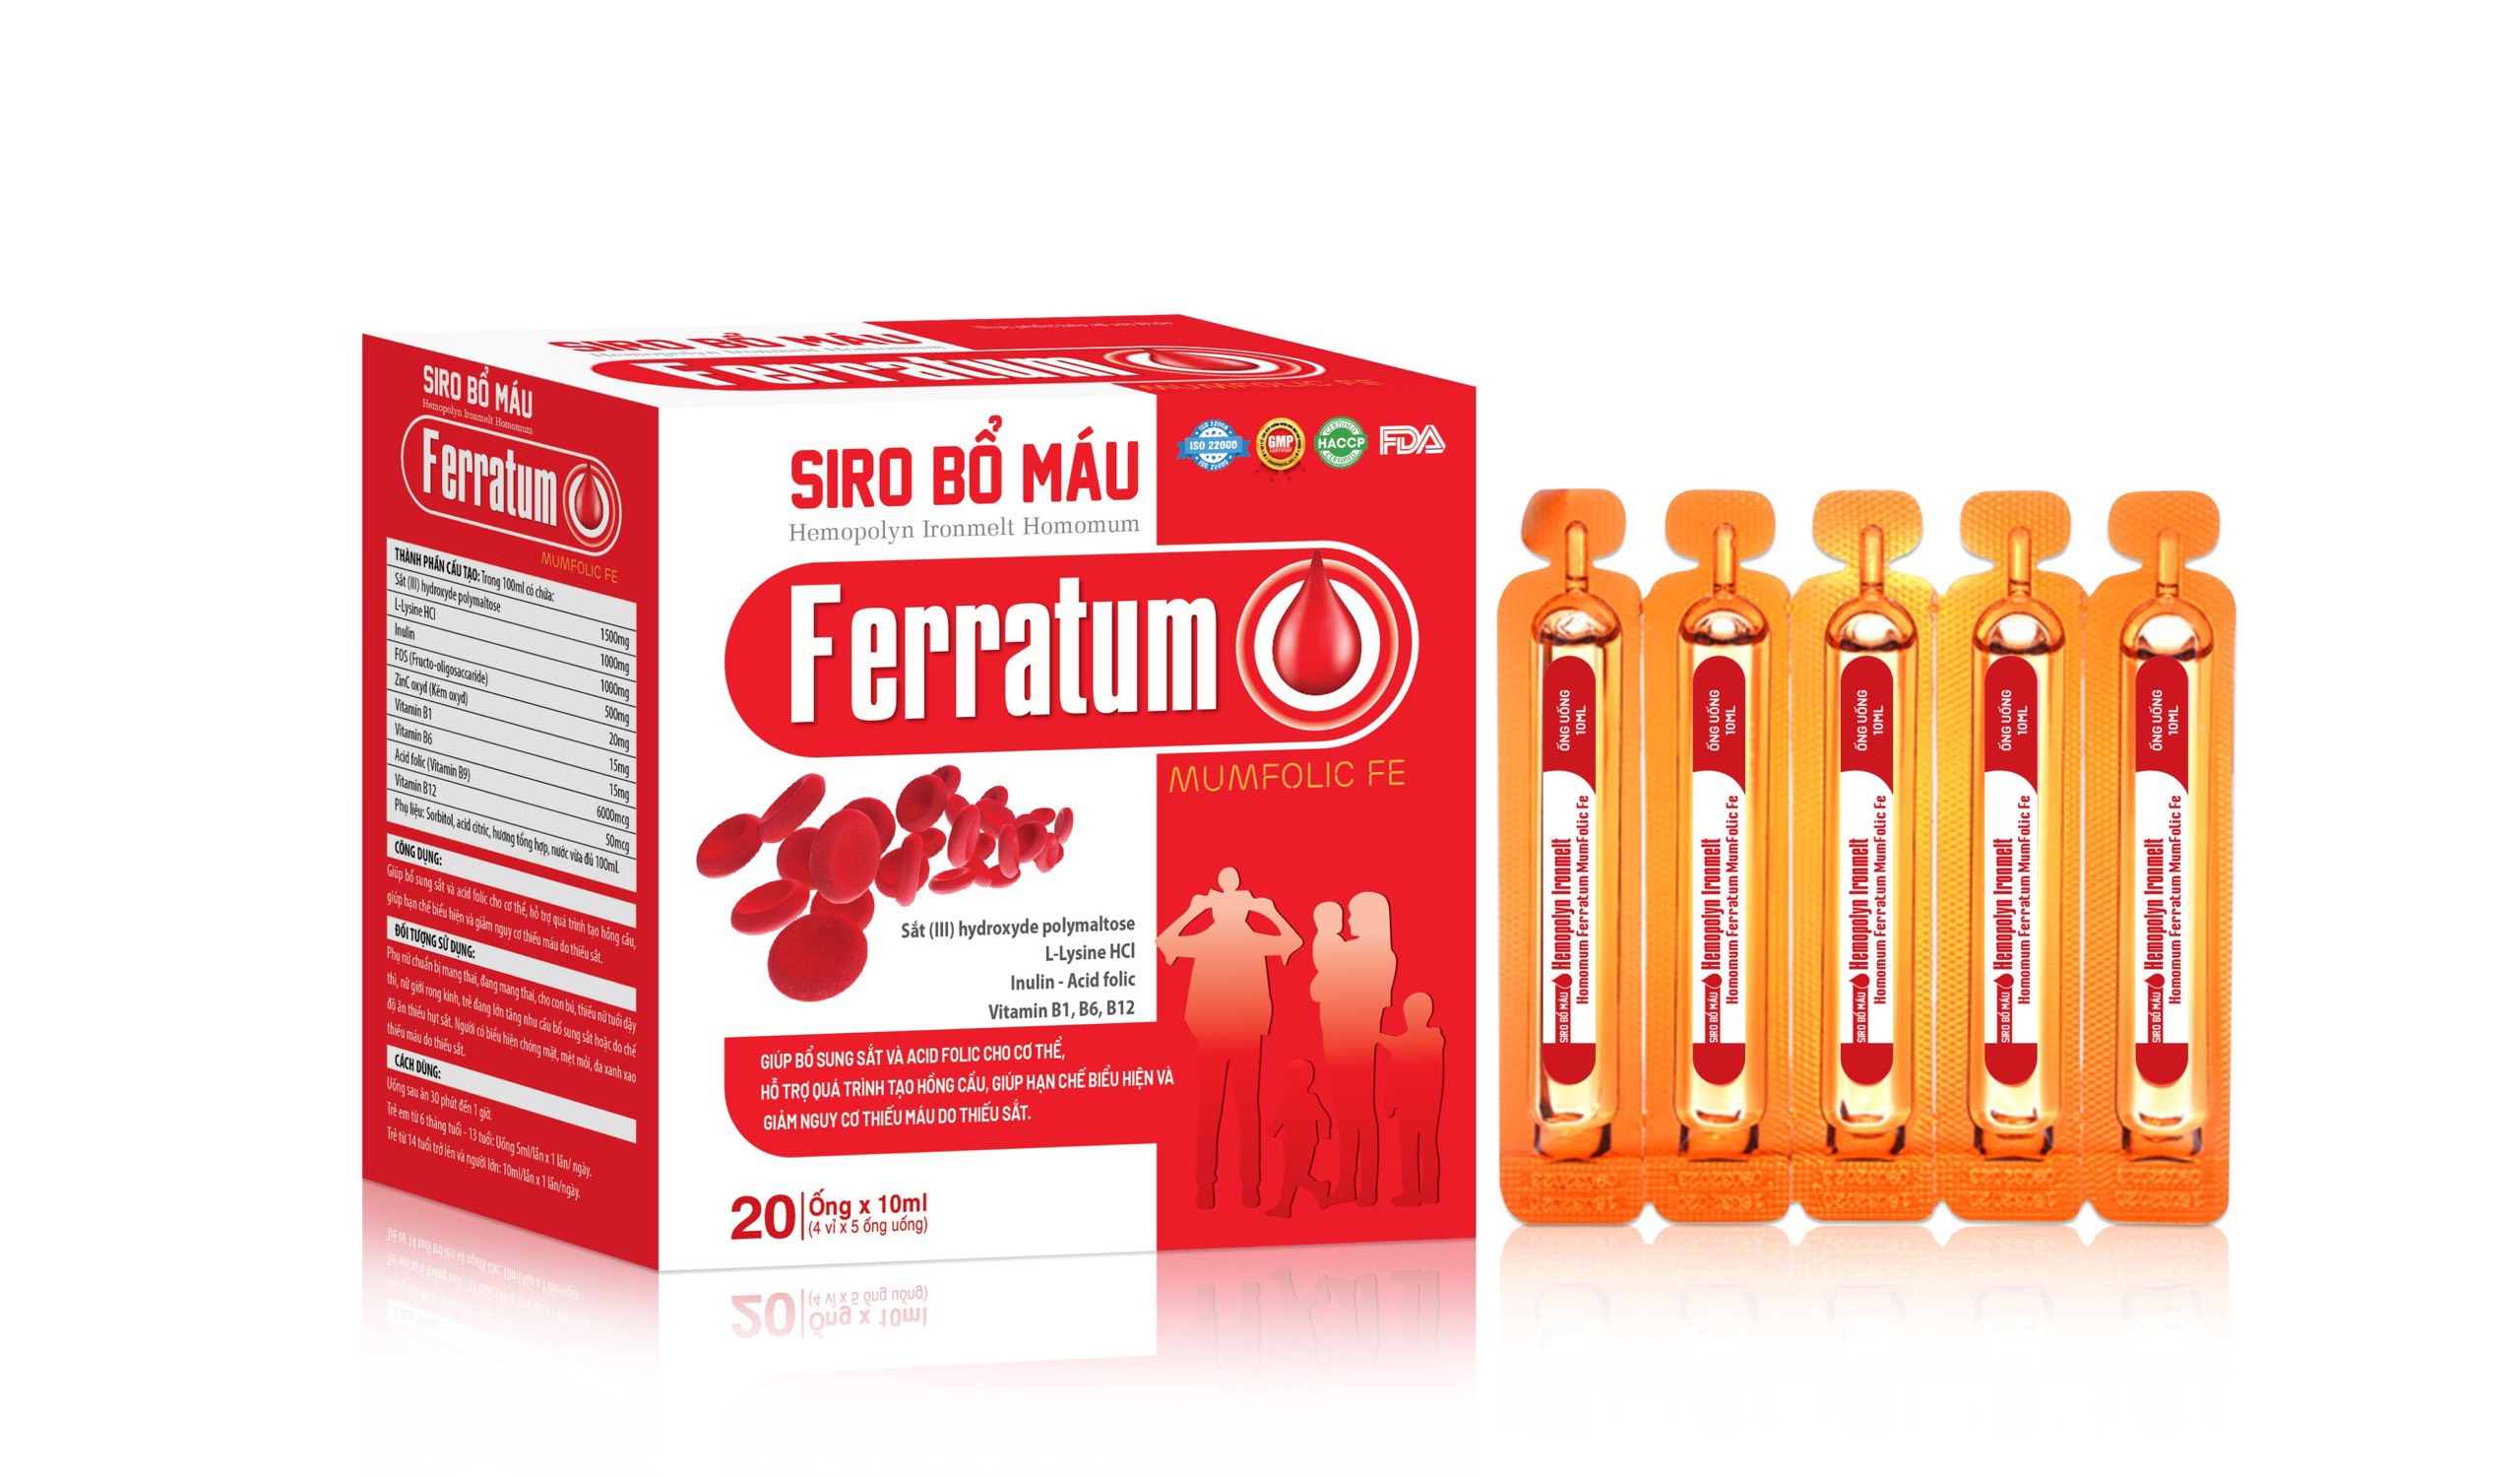 Siro Bổ Máu Ferratum giúp bổ sung sắt, giảm nguy cơ thiếu máu do thiếu sắt